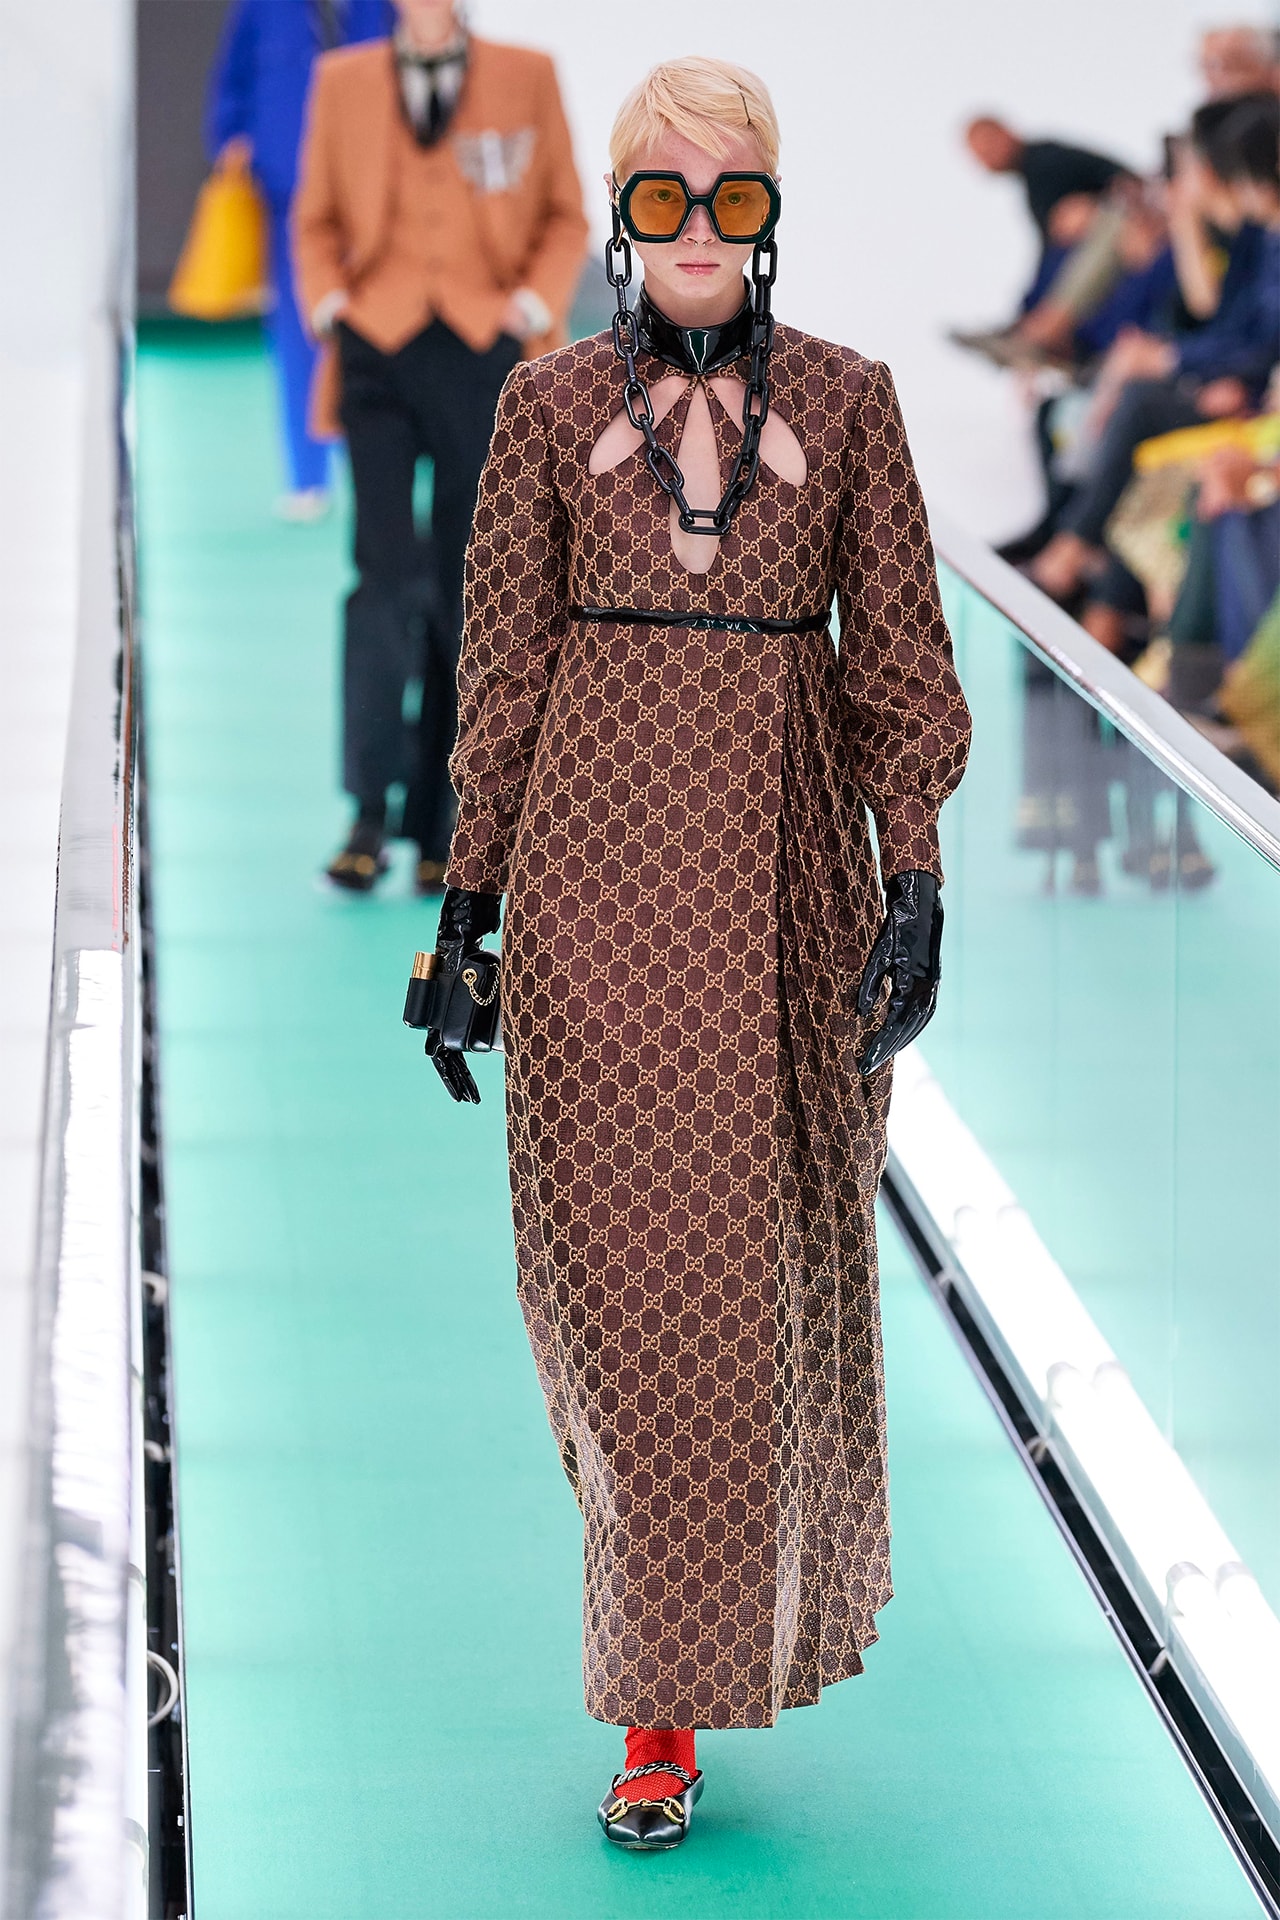 Gucci Orgasmique Spring Summer 2020 Runway Show Milan Fashion Week SS20 brown dress